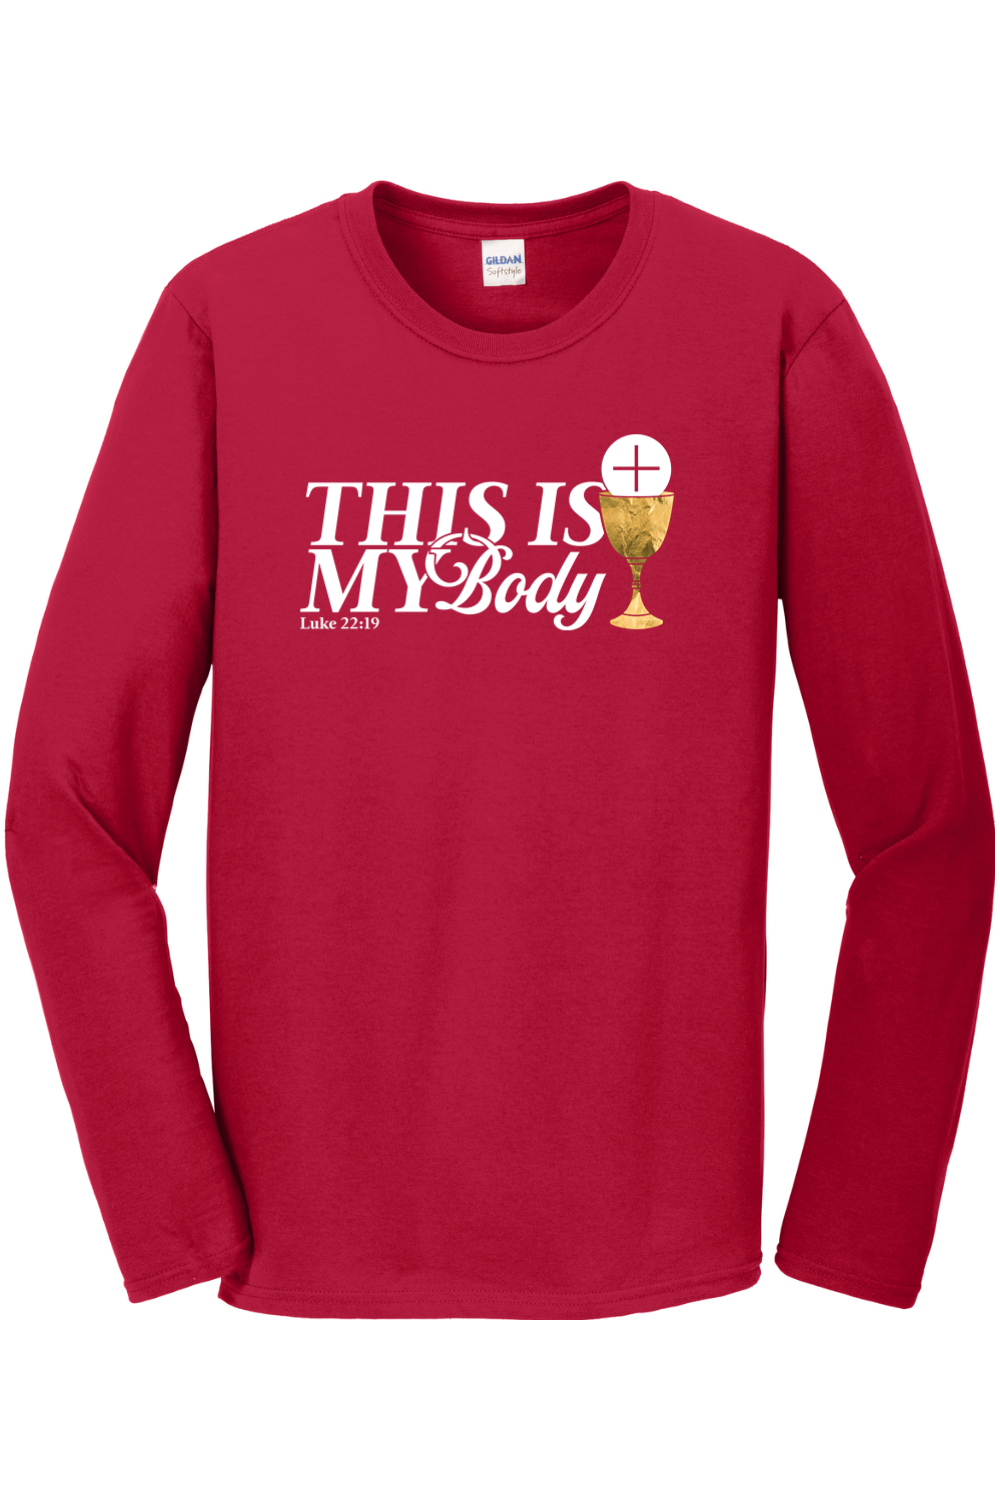 This is My Body, Chalice - Luke 22:19 Longsleeve T-shirt